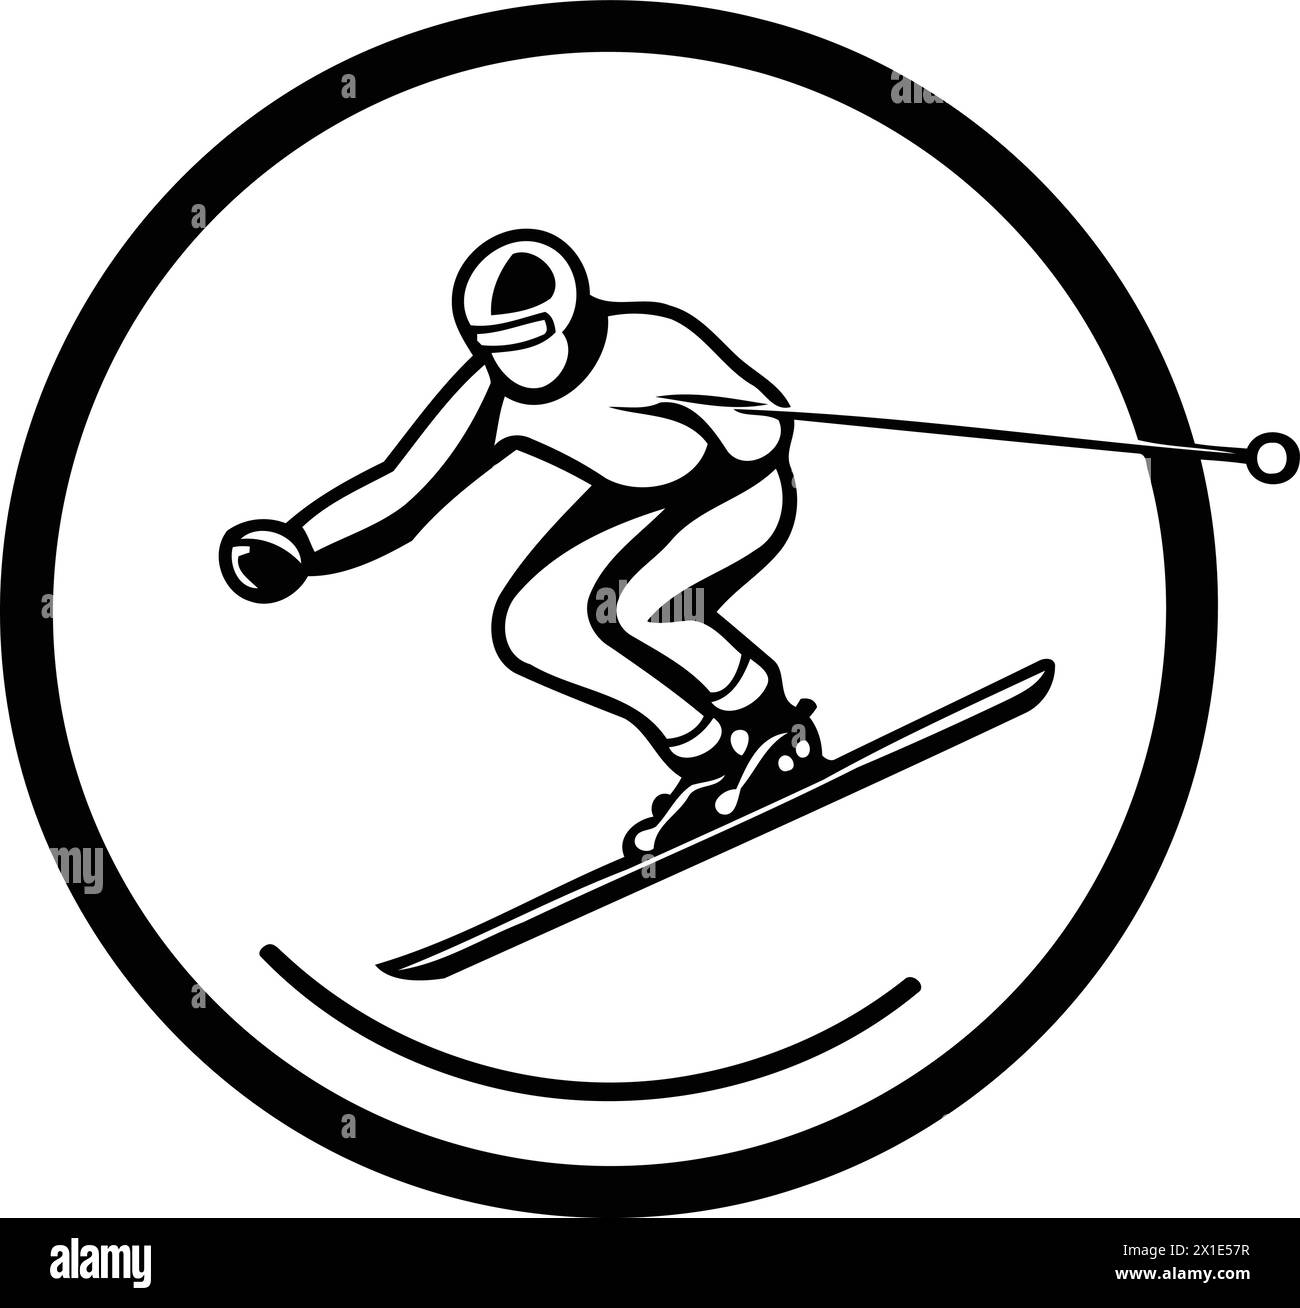 Ski-Logo. Vektor-Illustration des Skier-Sprungens auf der Skipiste. Stock Vektor